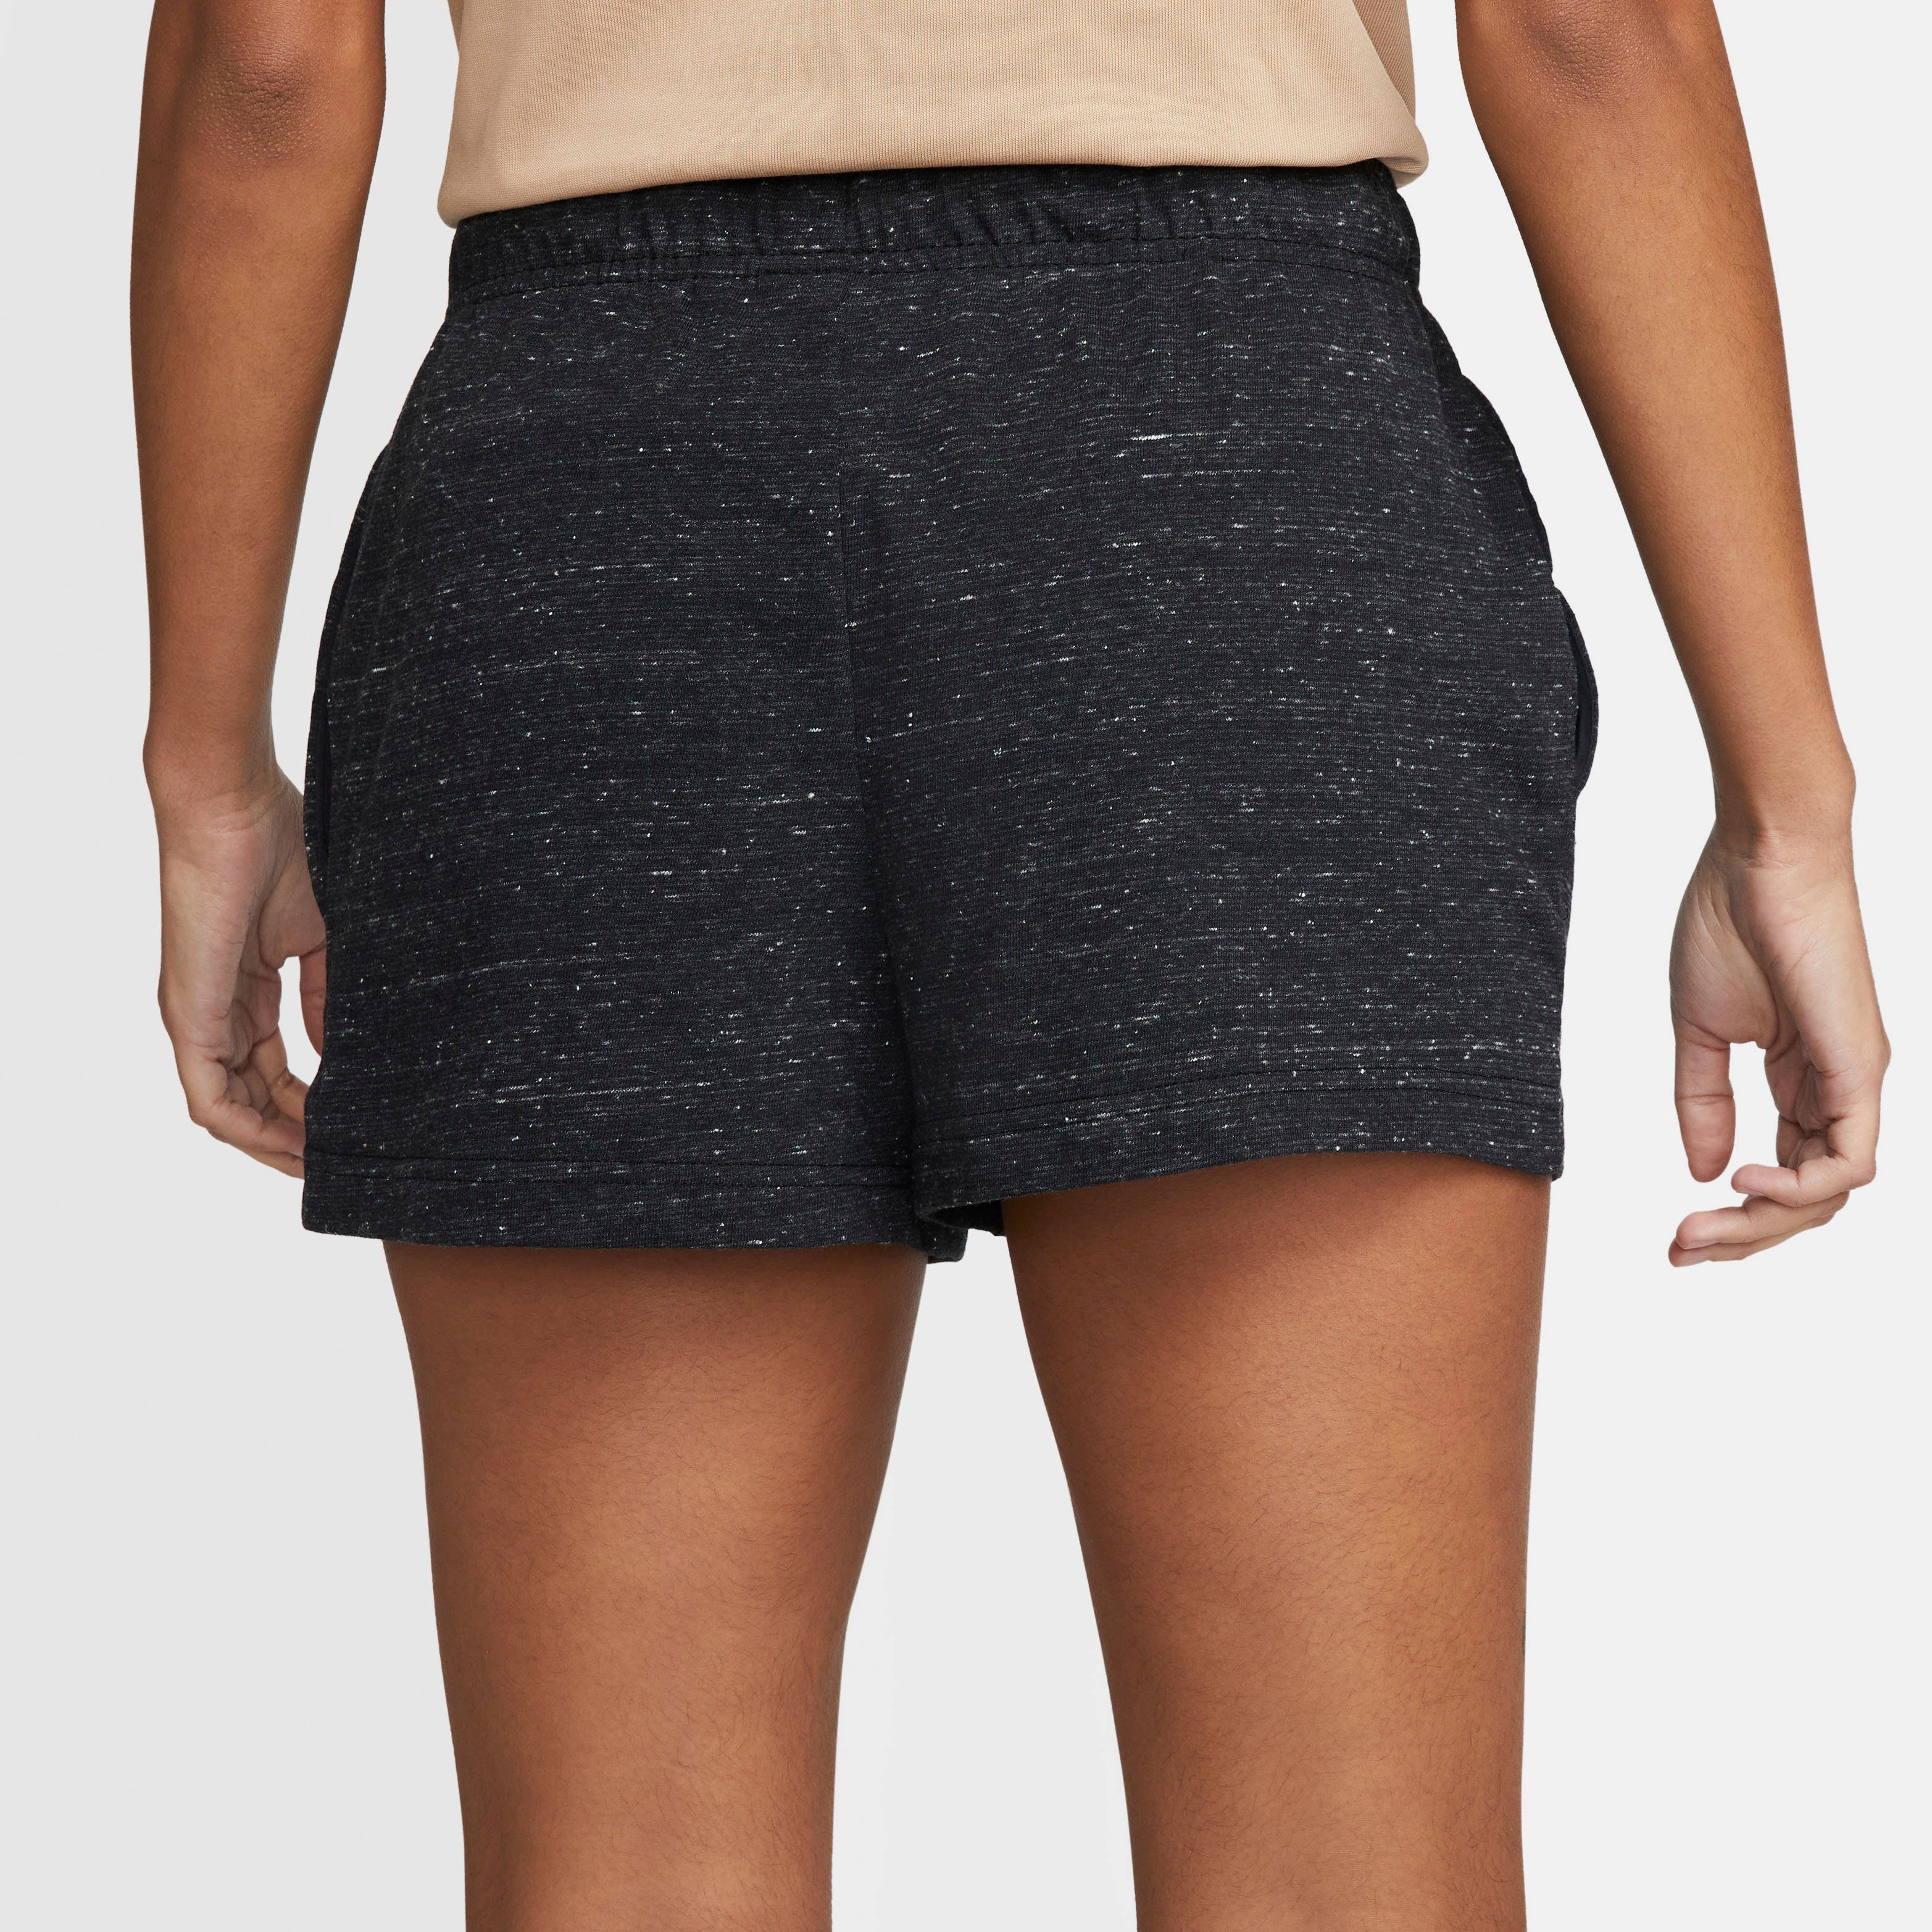 Sportswear Vintage Gym Shorts Shorts BLACK/WHITE Nike Women's